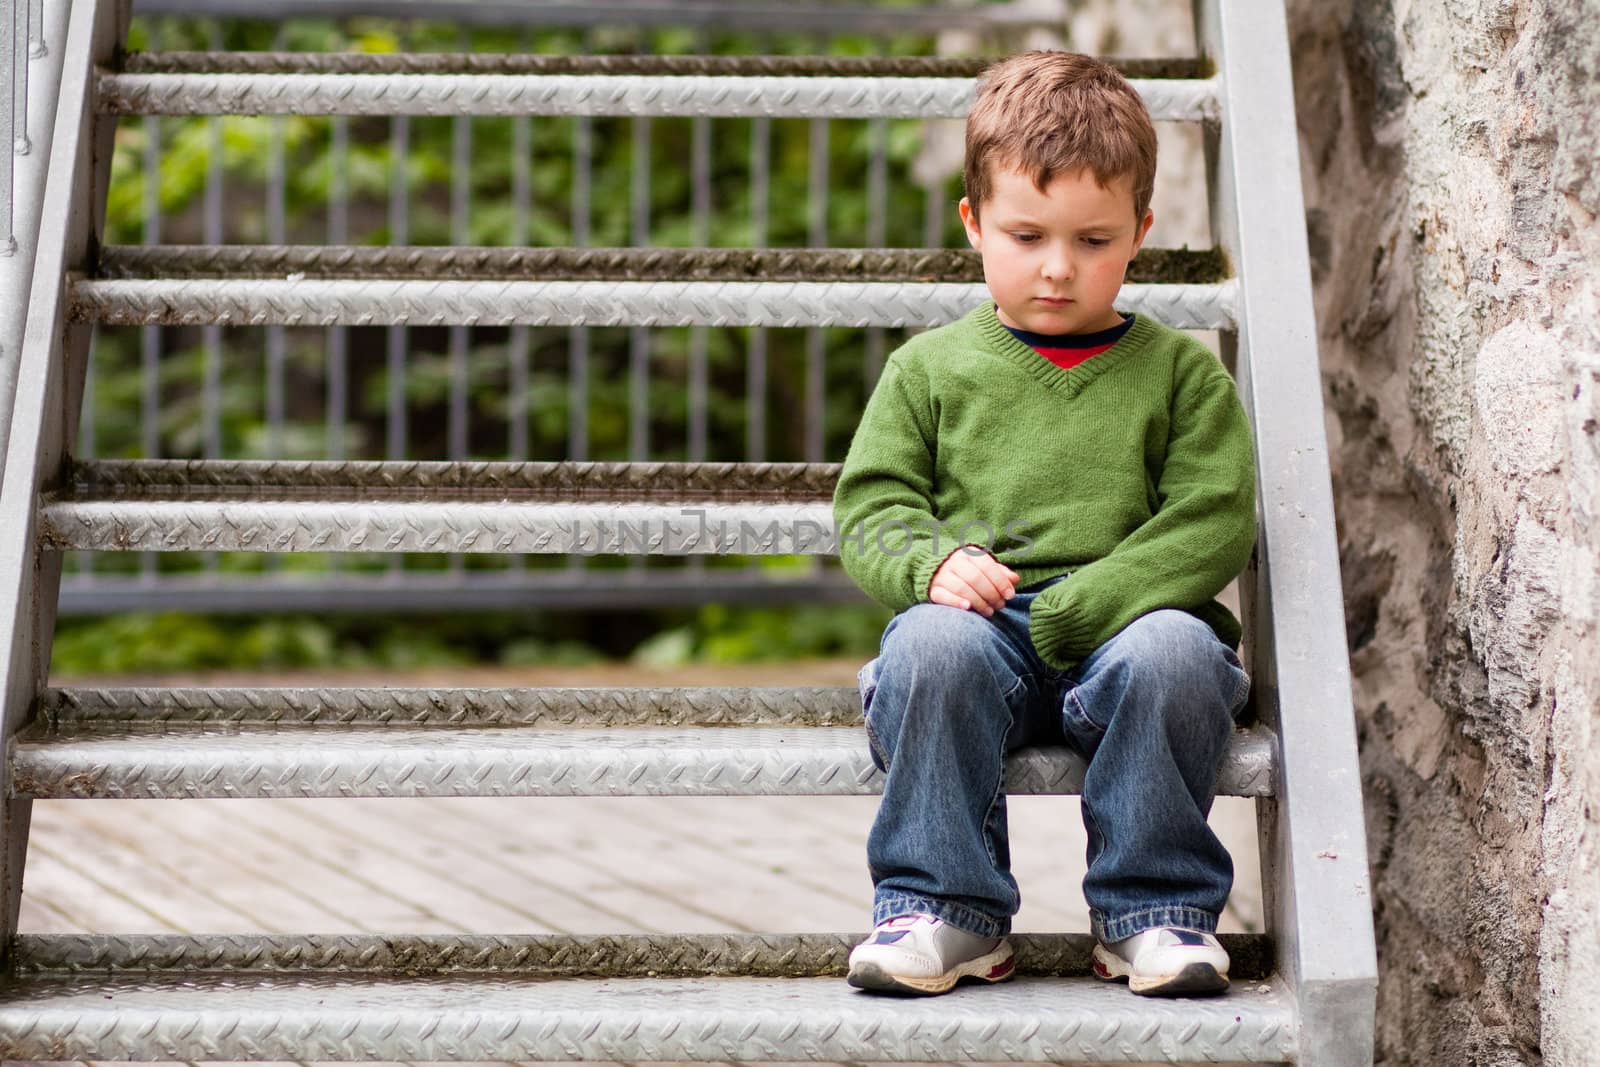 Sad little boy sitting alone on stairs